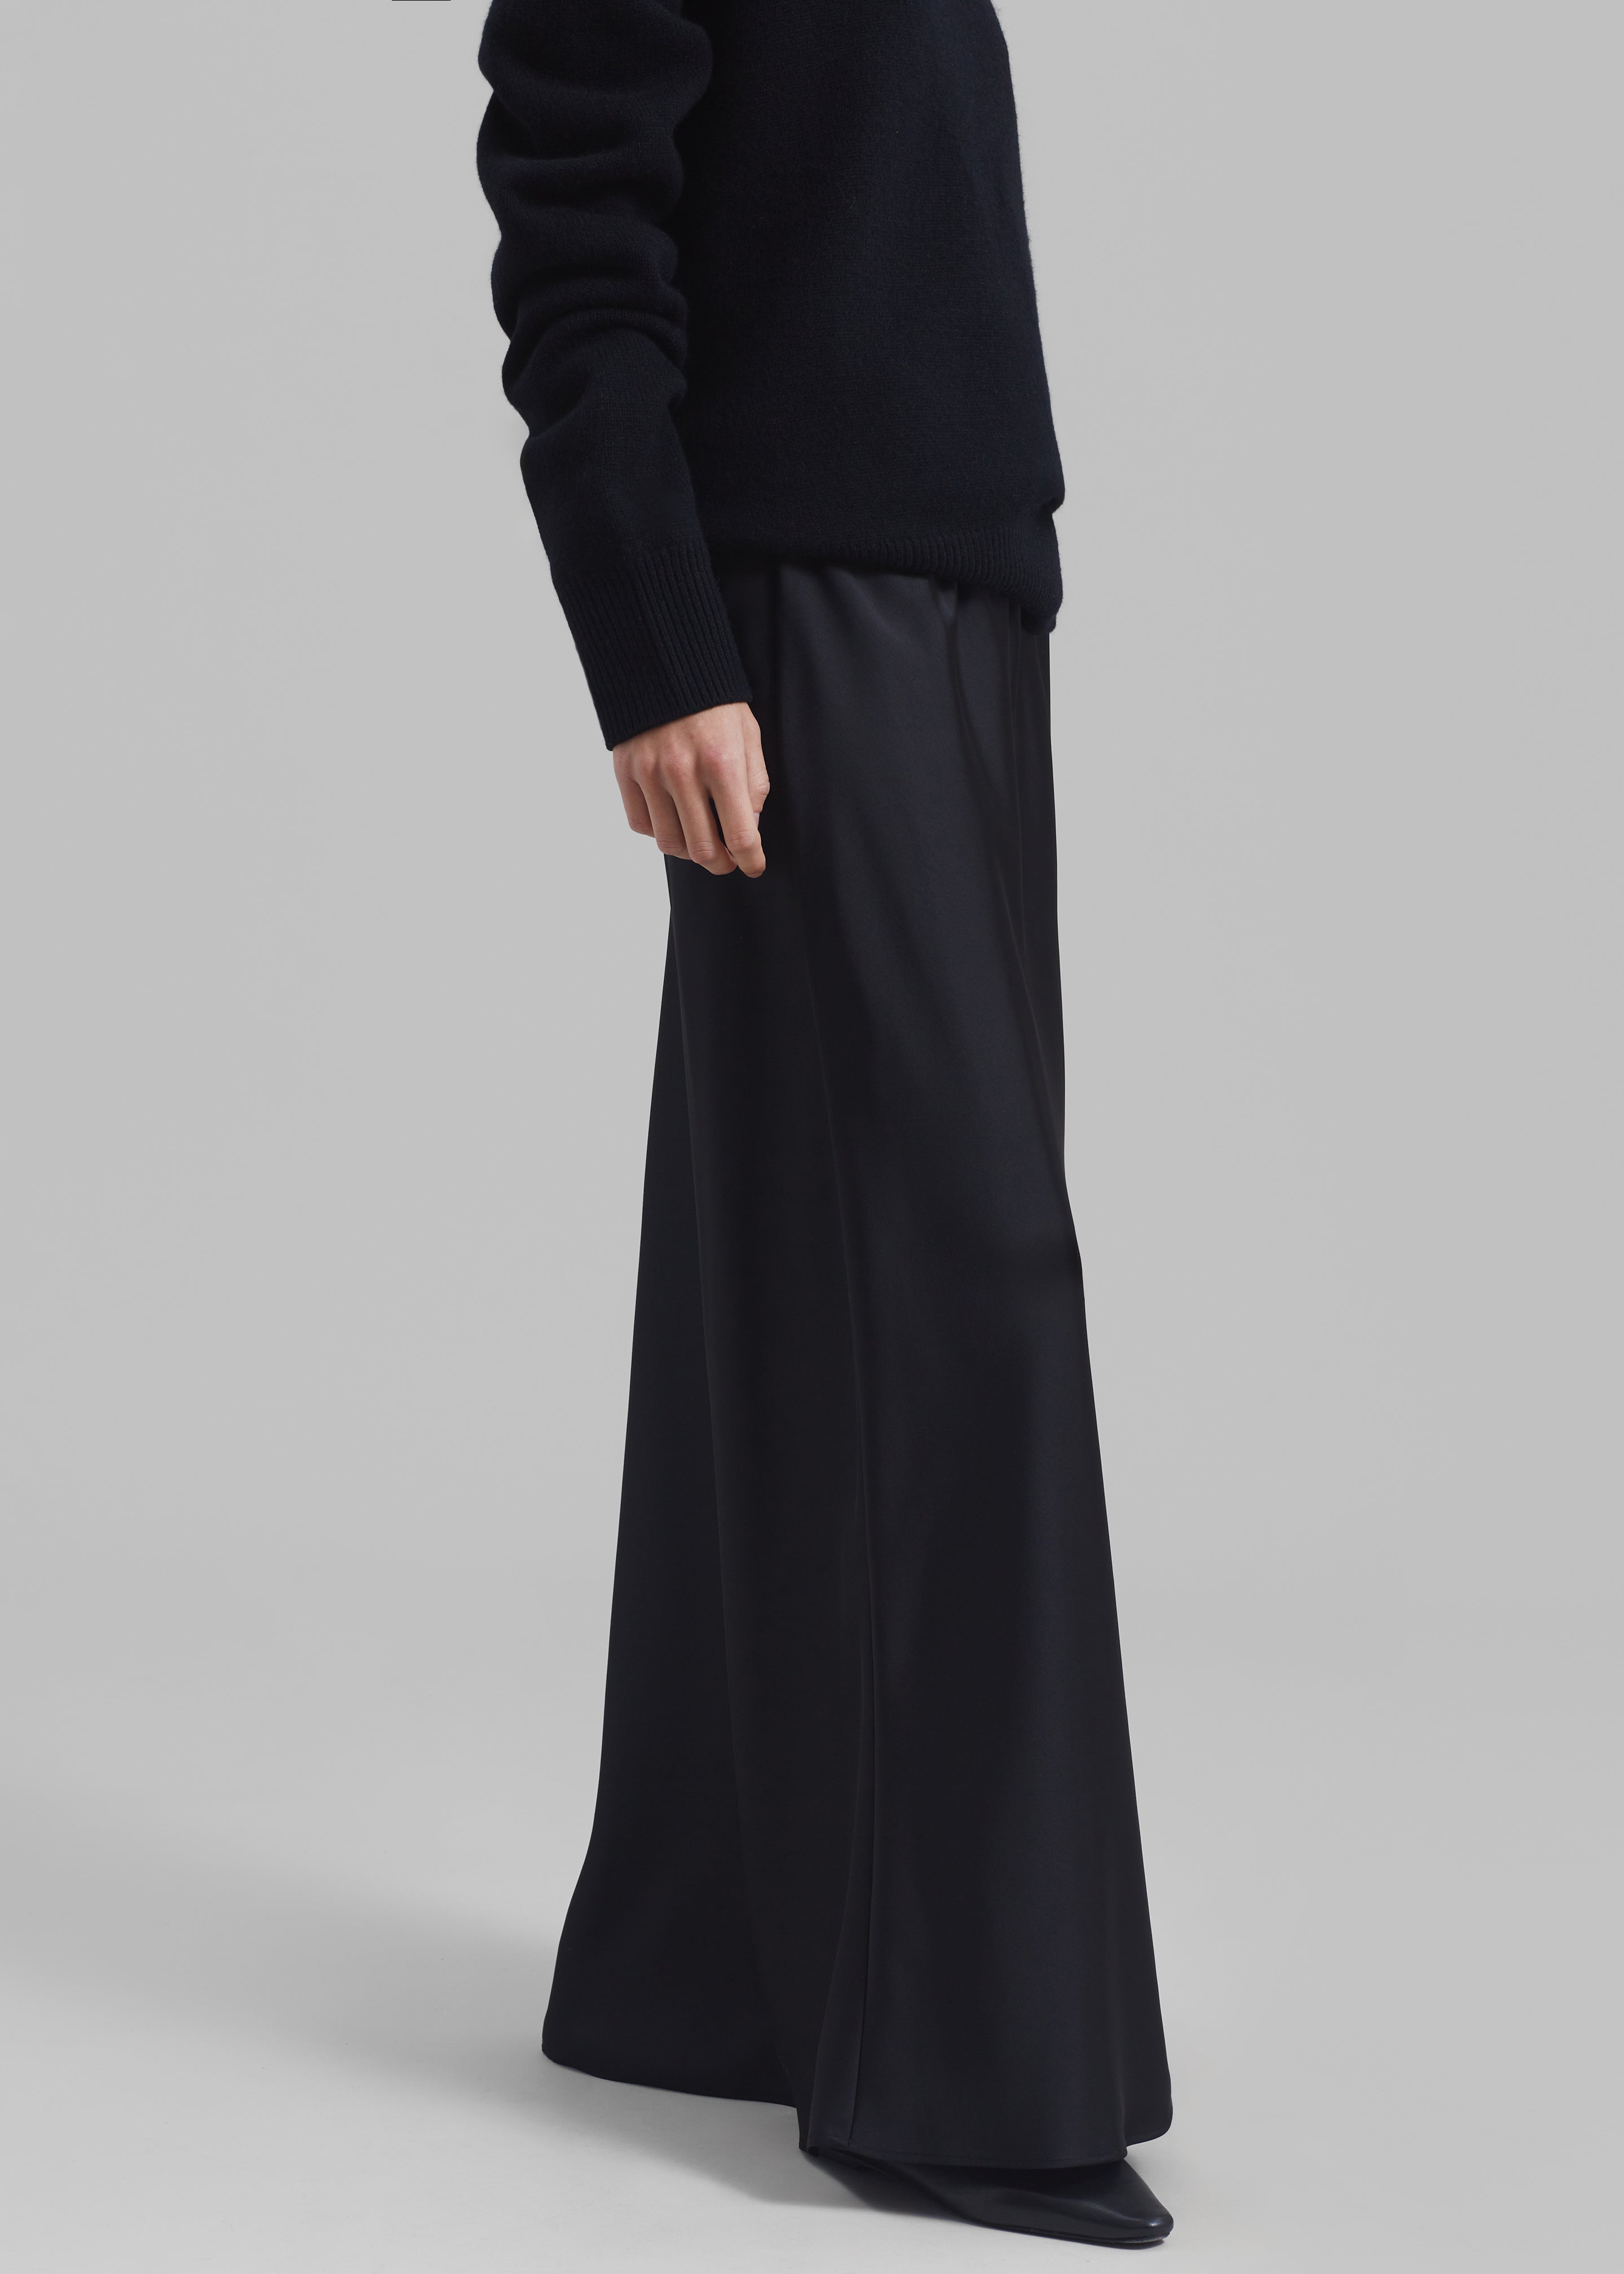 Priscilla Maxi Satin Skirt - Black - 3